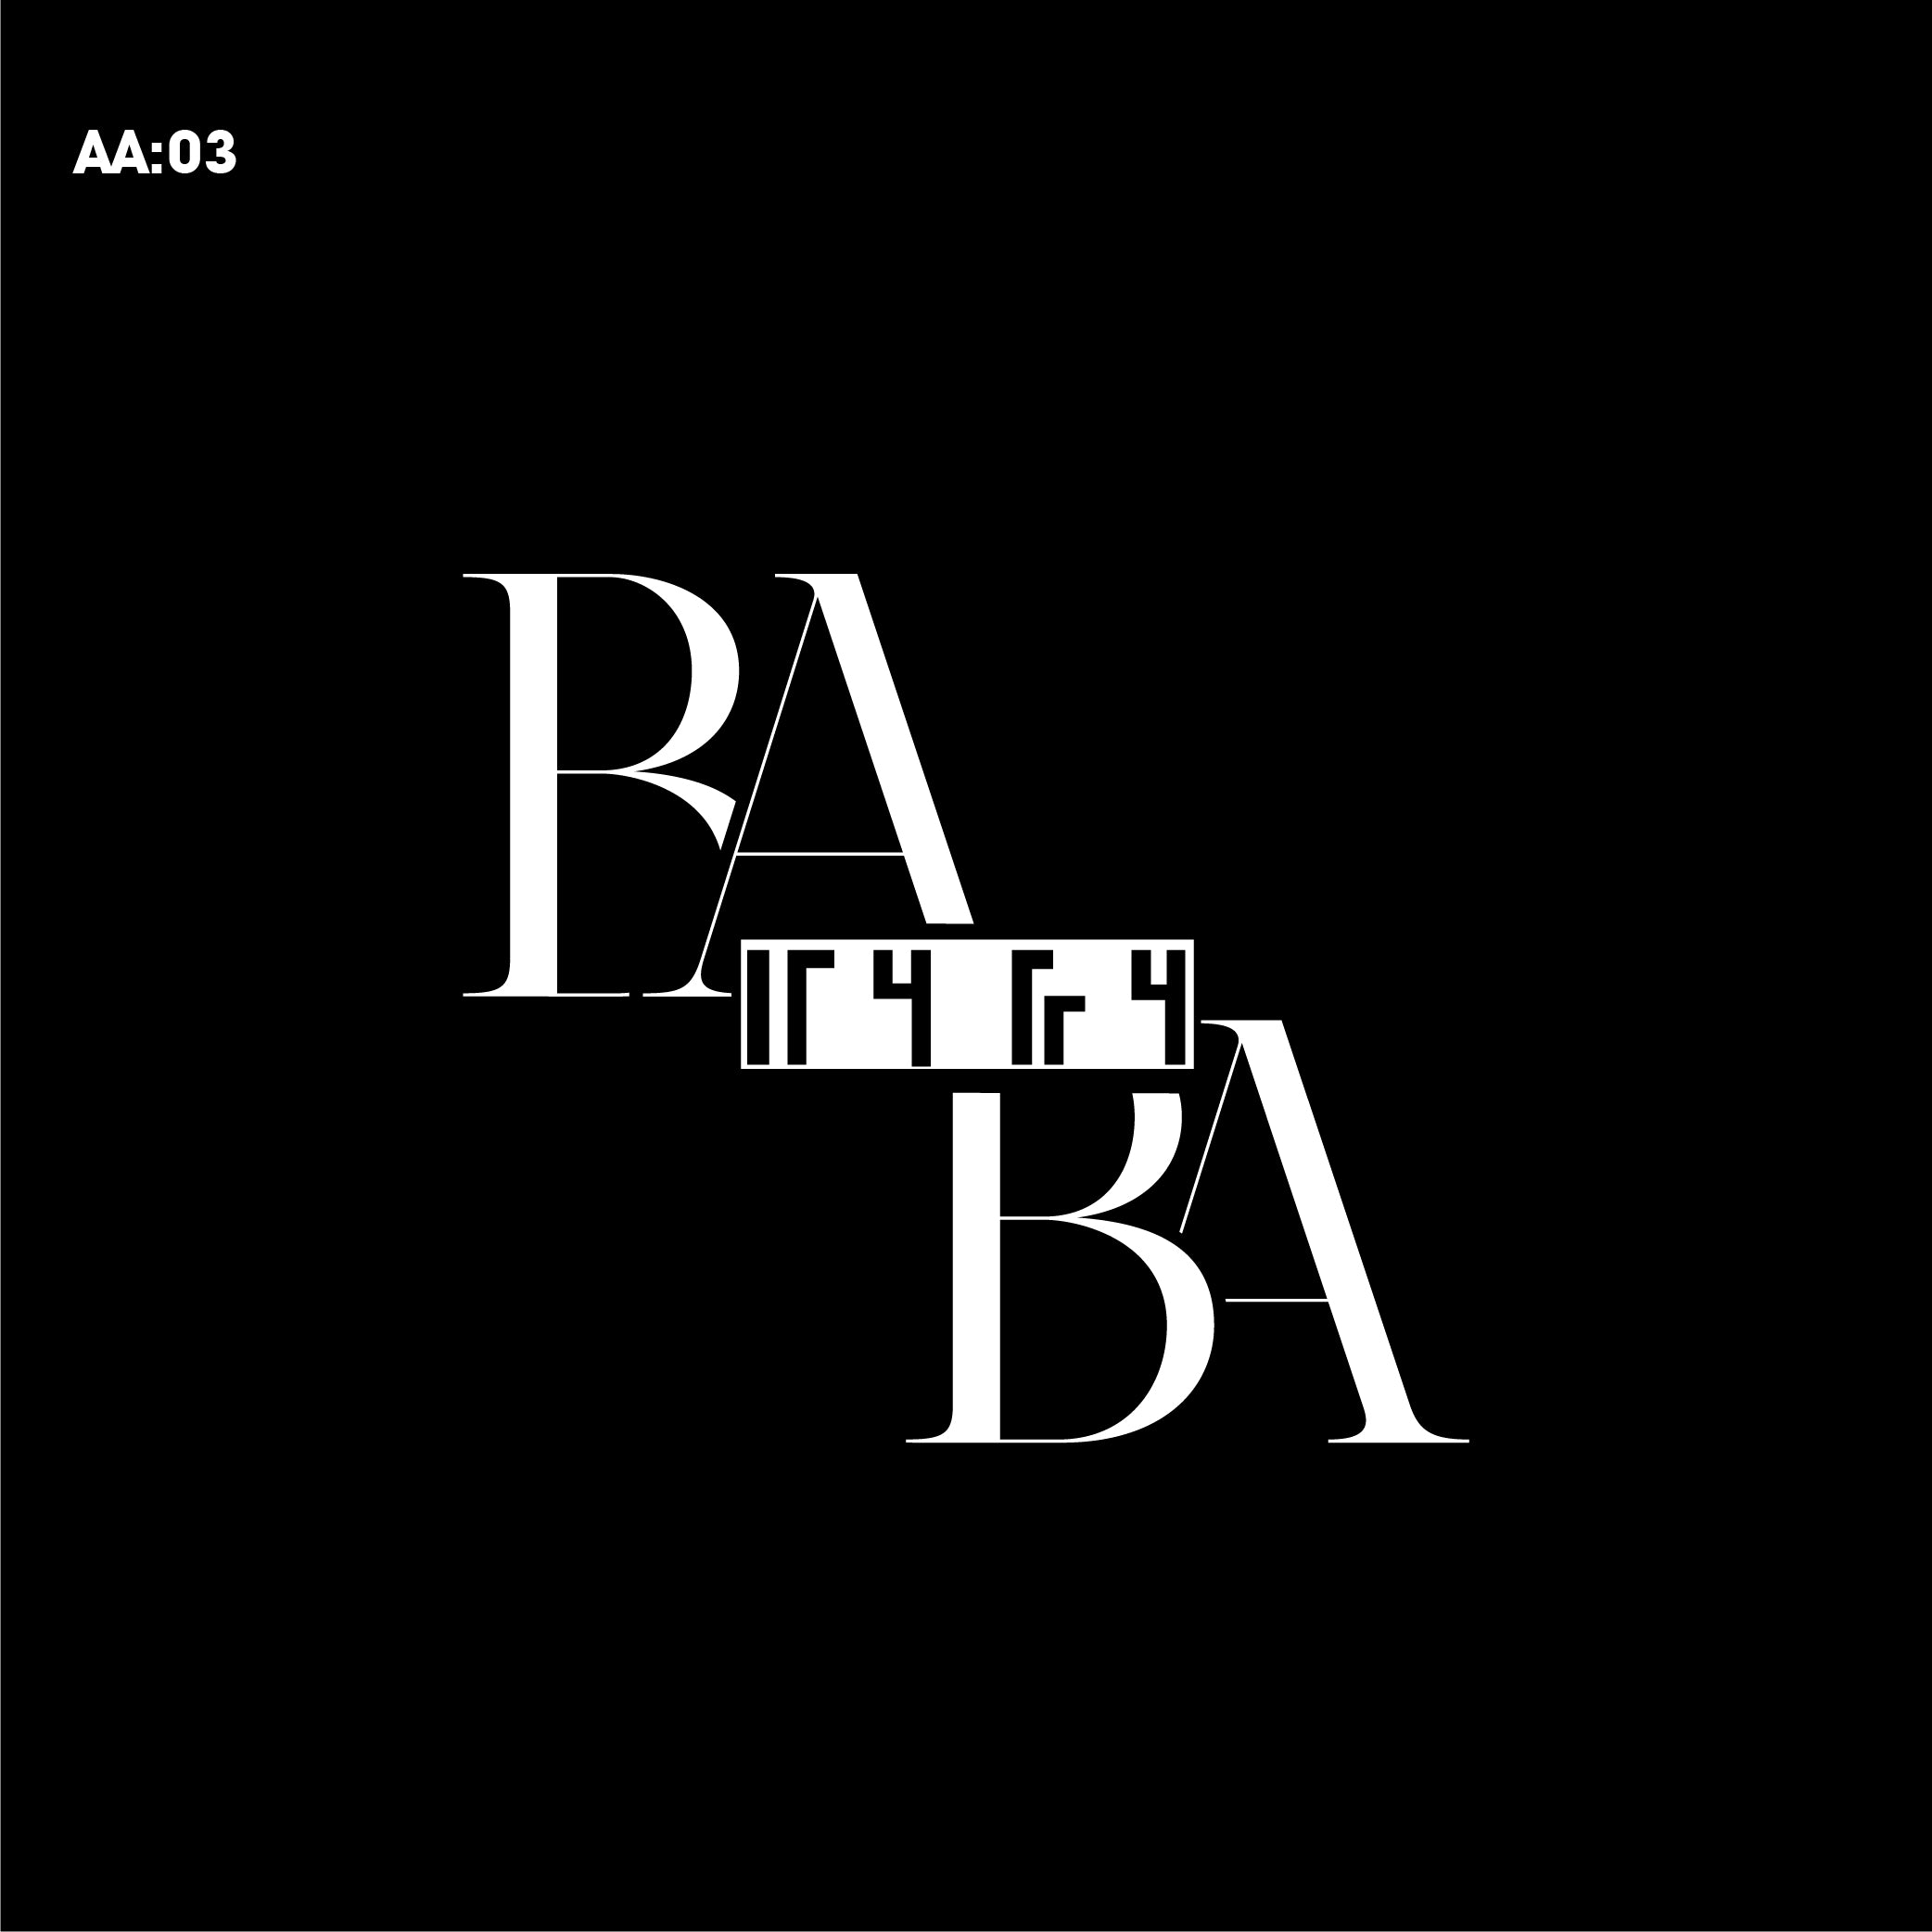 Load video: BABA showcase